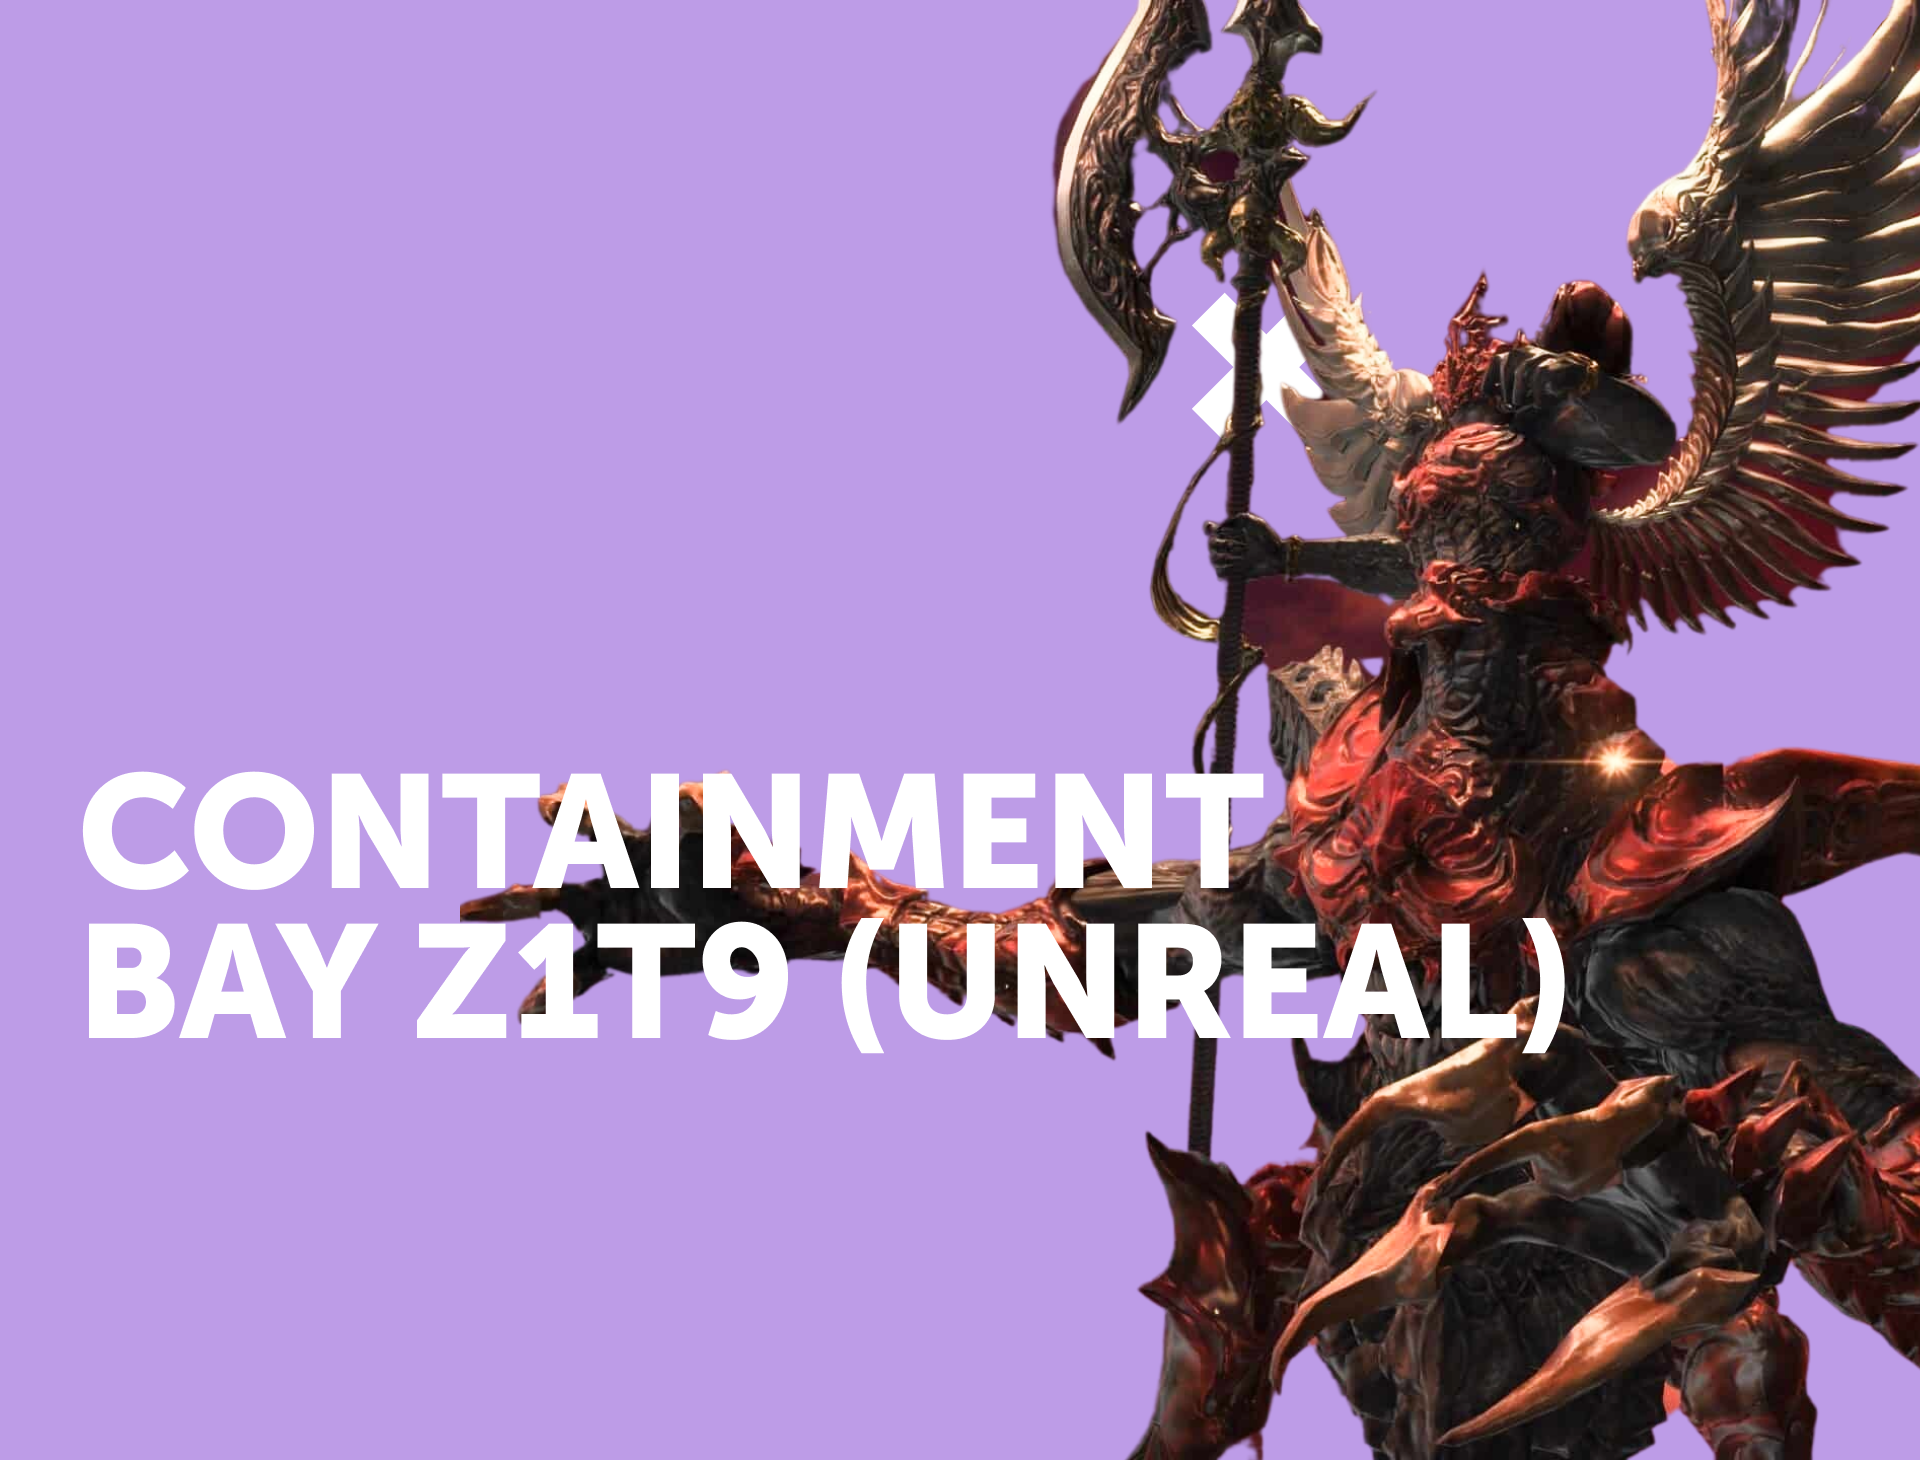 Containment Bay Z1T9 (Unreal)